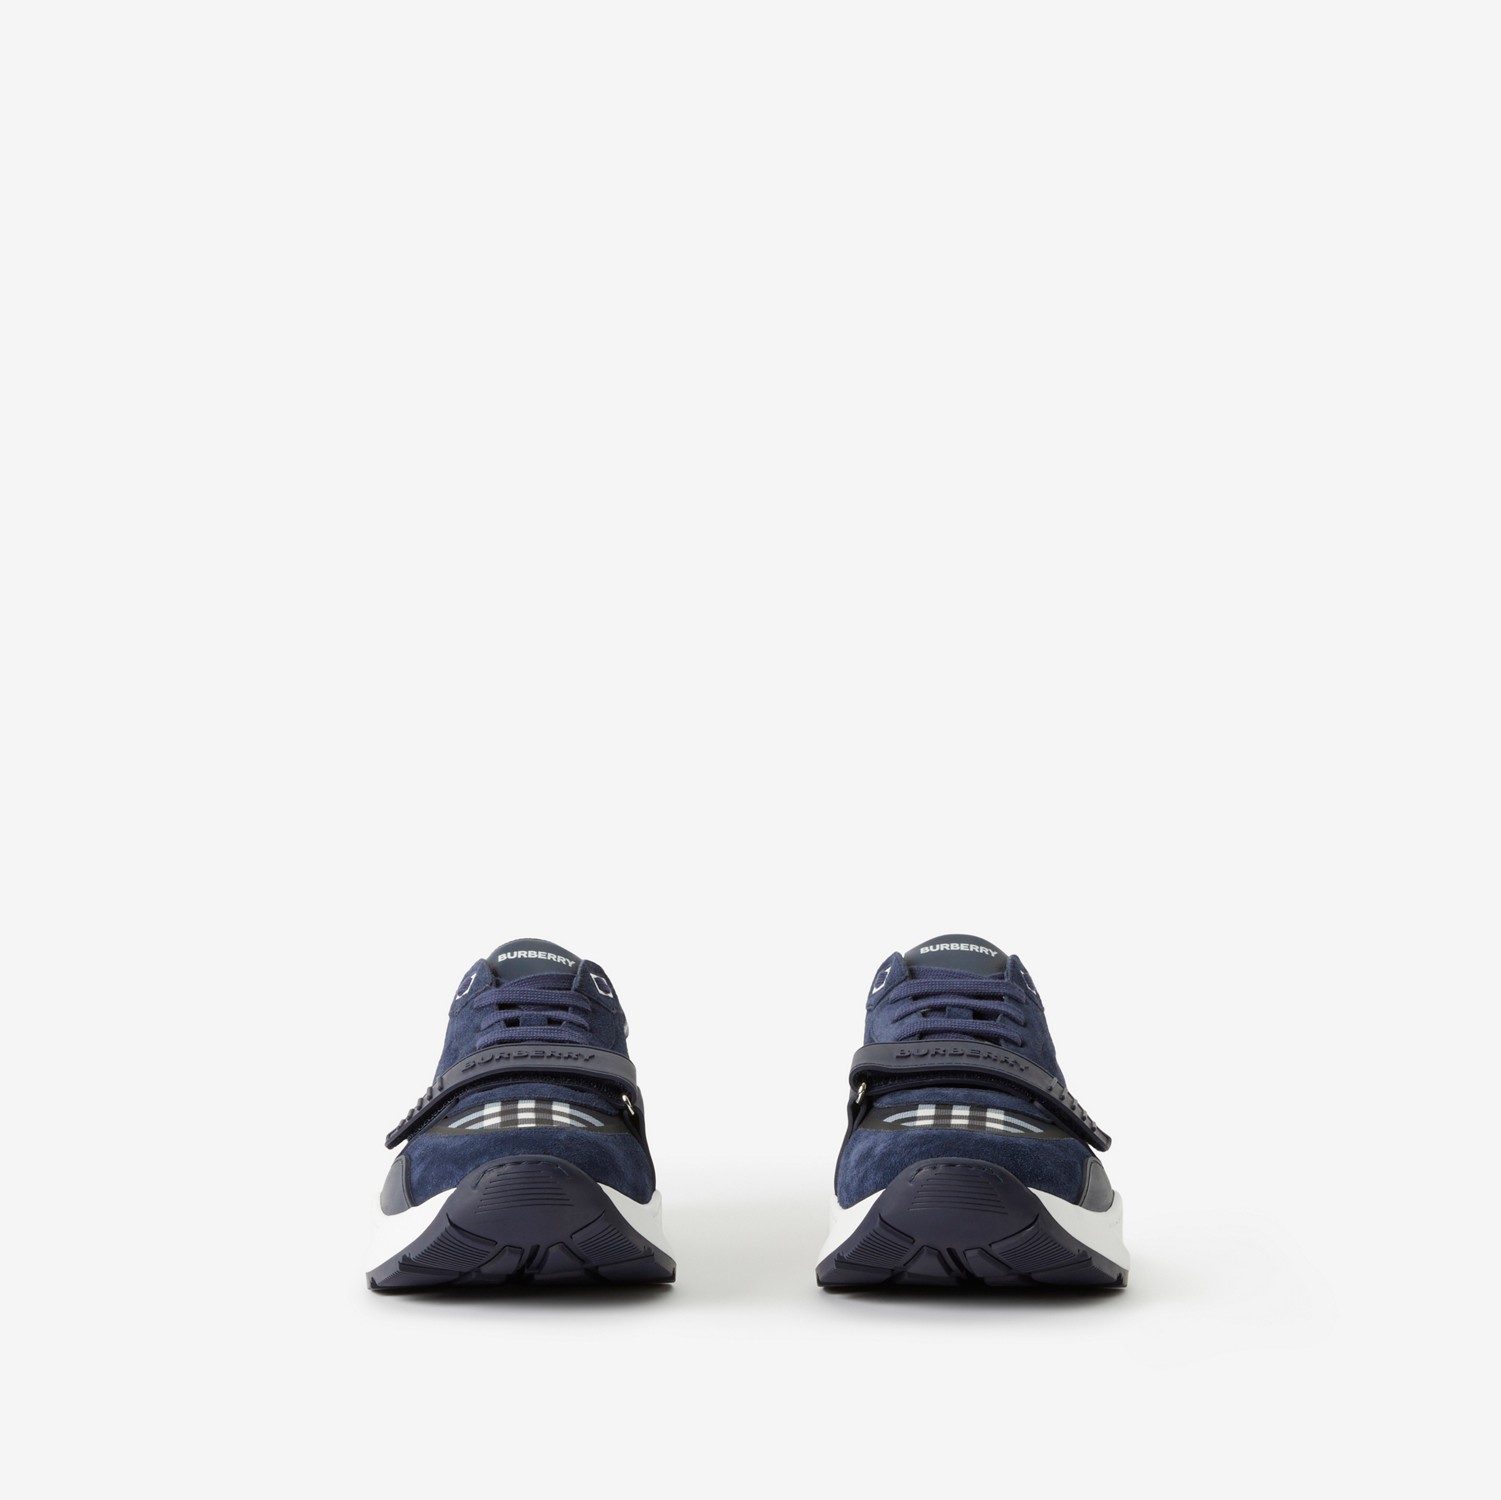 Sneaker aus Check-Gewebe, Leder und Veloursleder (Blau) - Herren | Burberry®